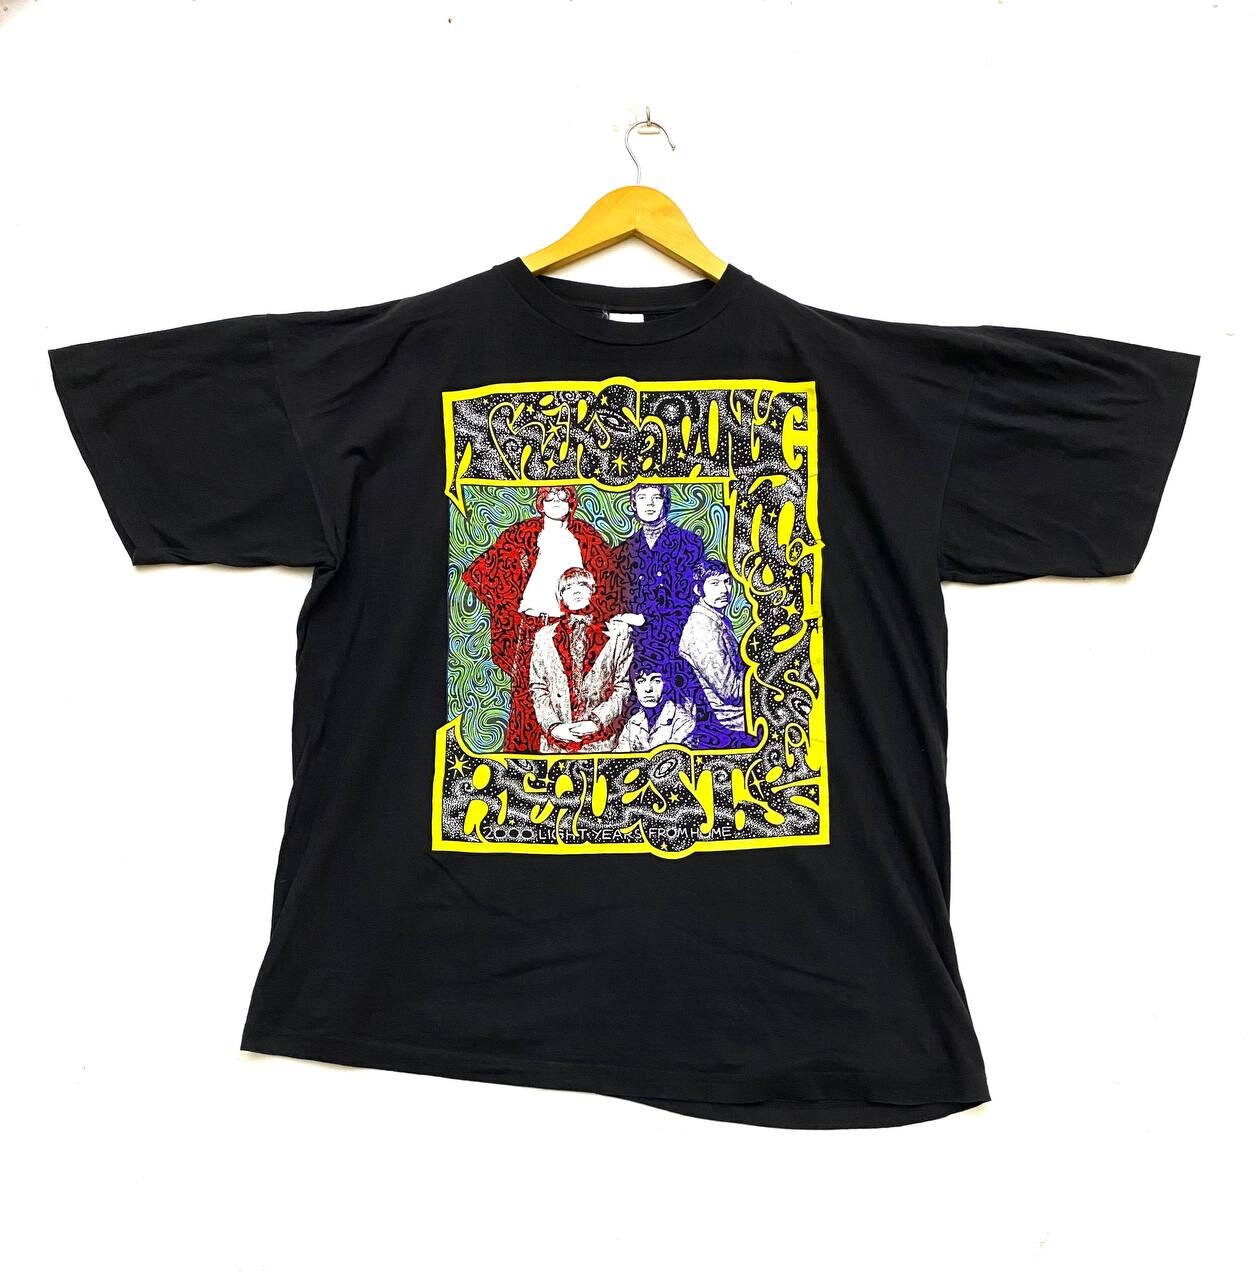 MARKET x Rolling Stones Dragon Men's T-Shirt Black 399001499-0001